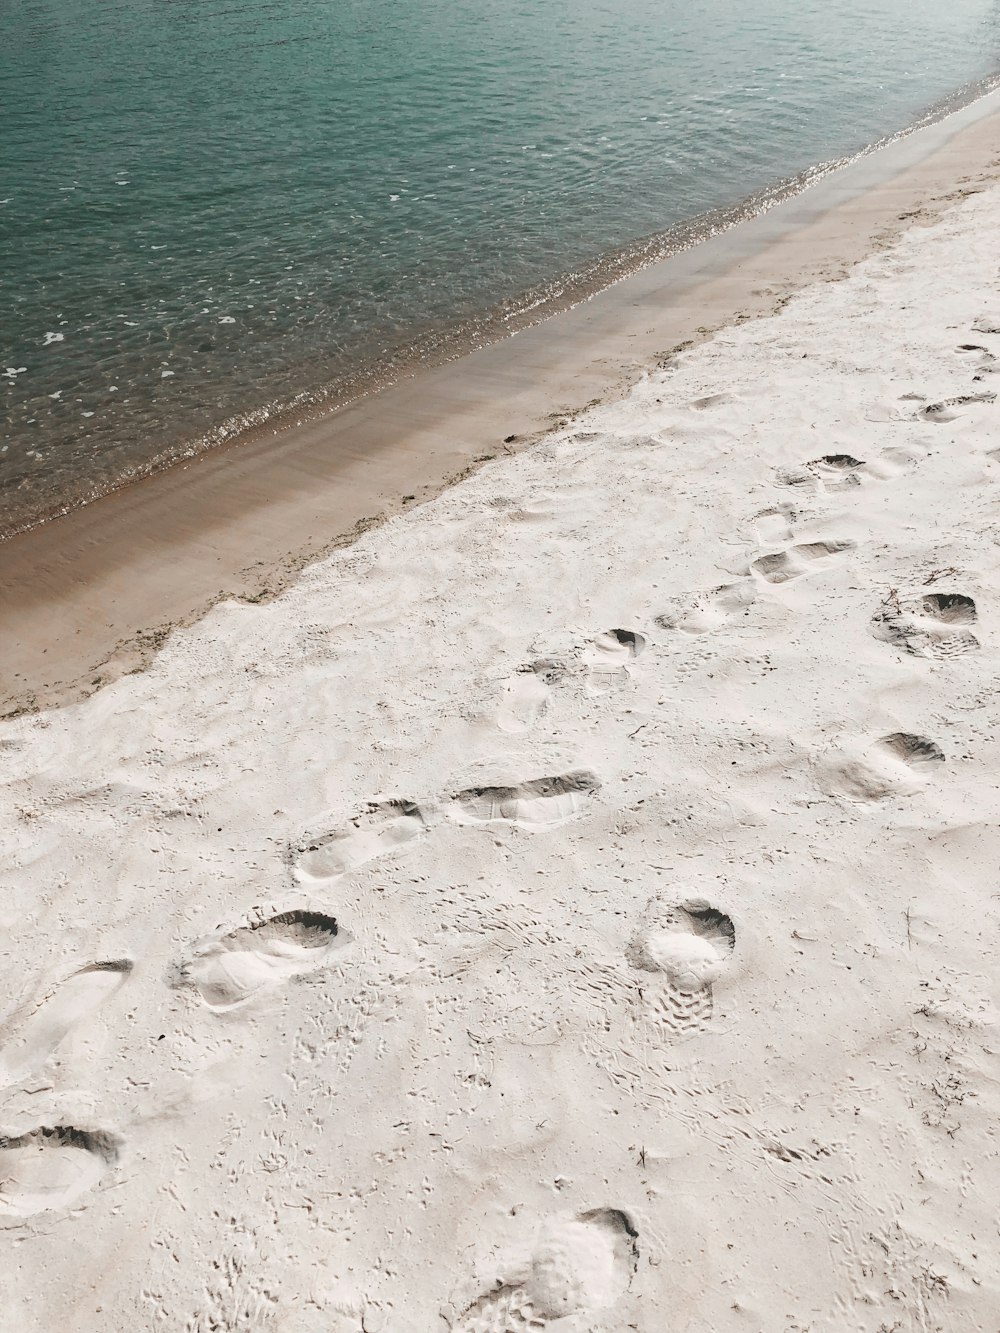 a beach with footprints